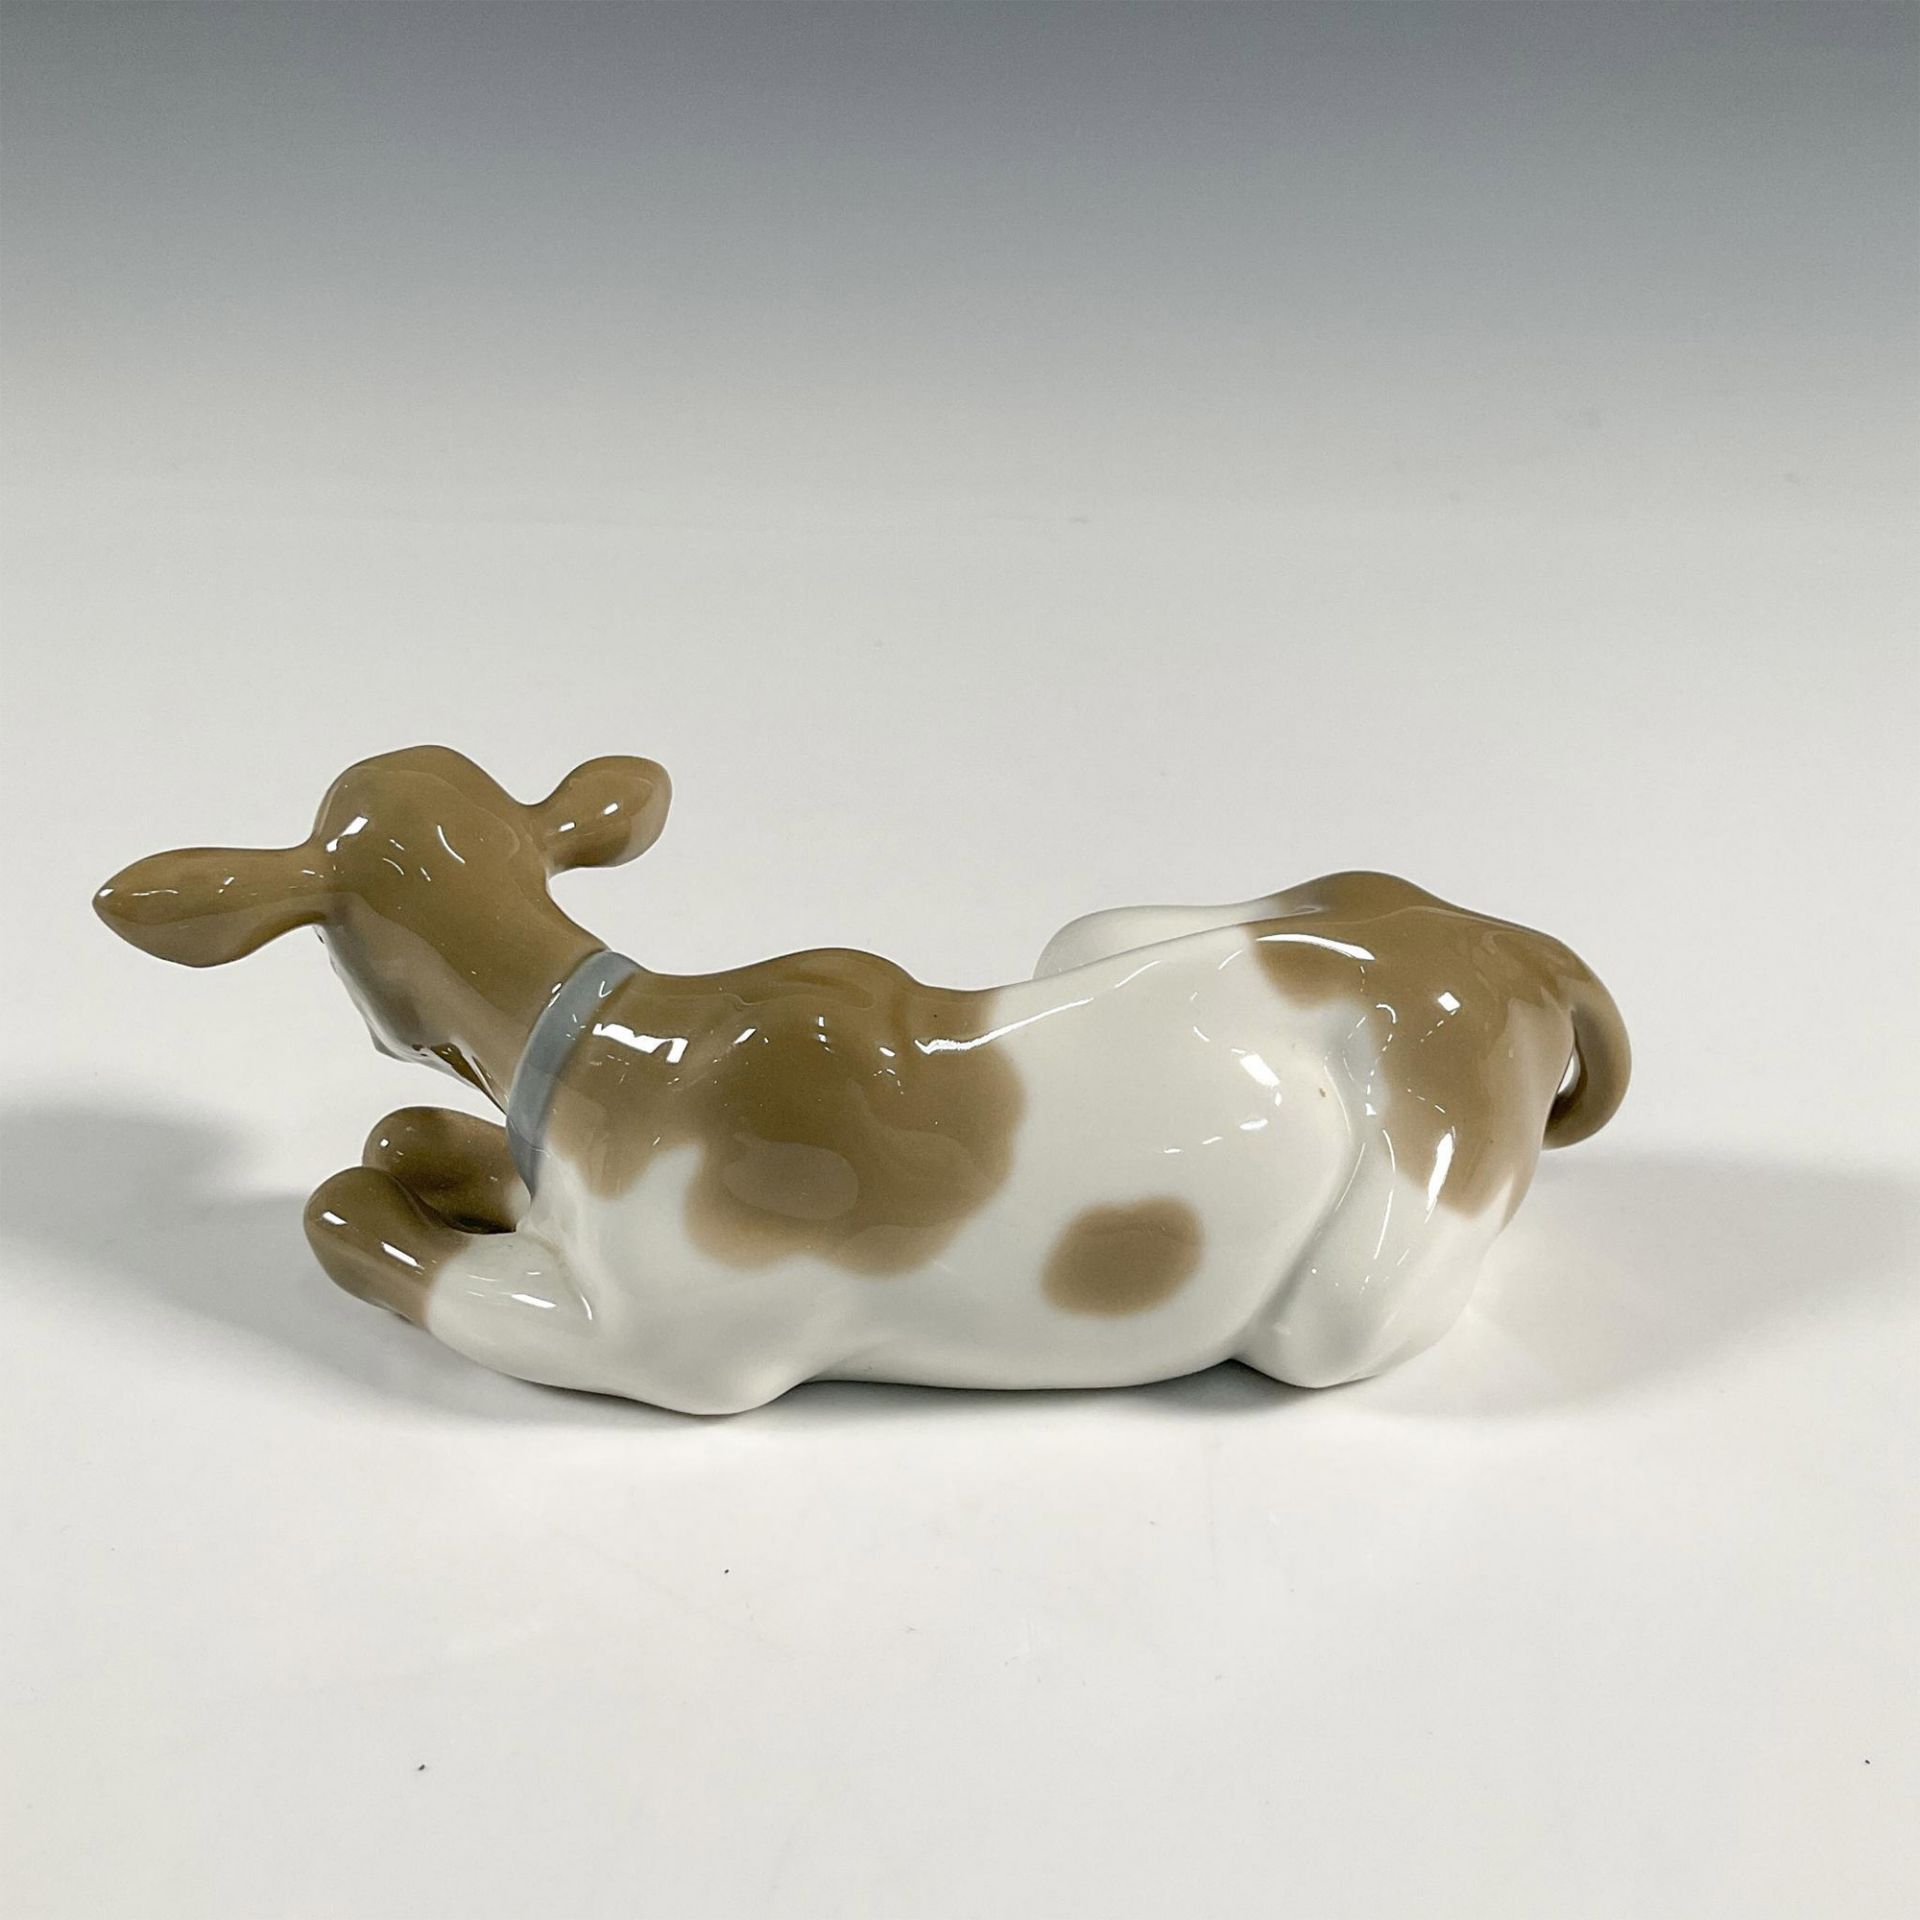 Cow 1004680 - Lladro Porcelain Figurine - Image 2 of 4